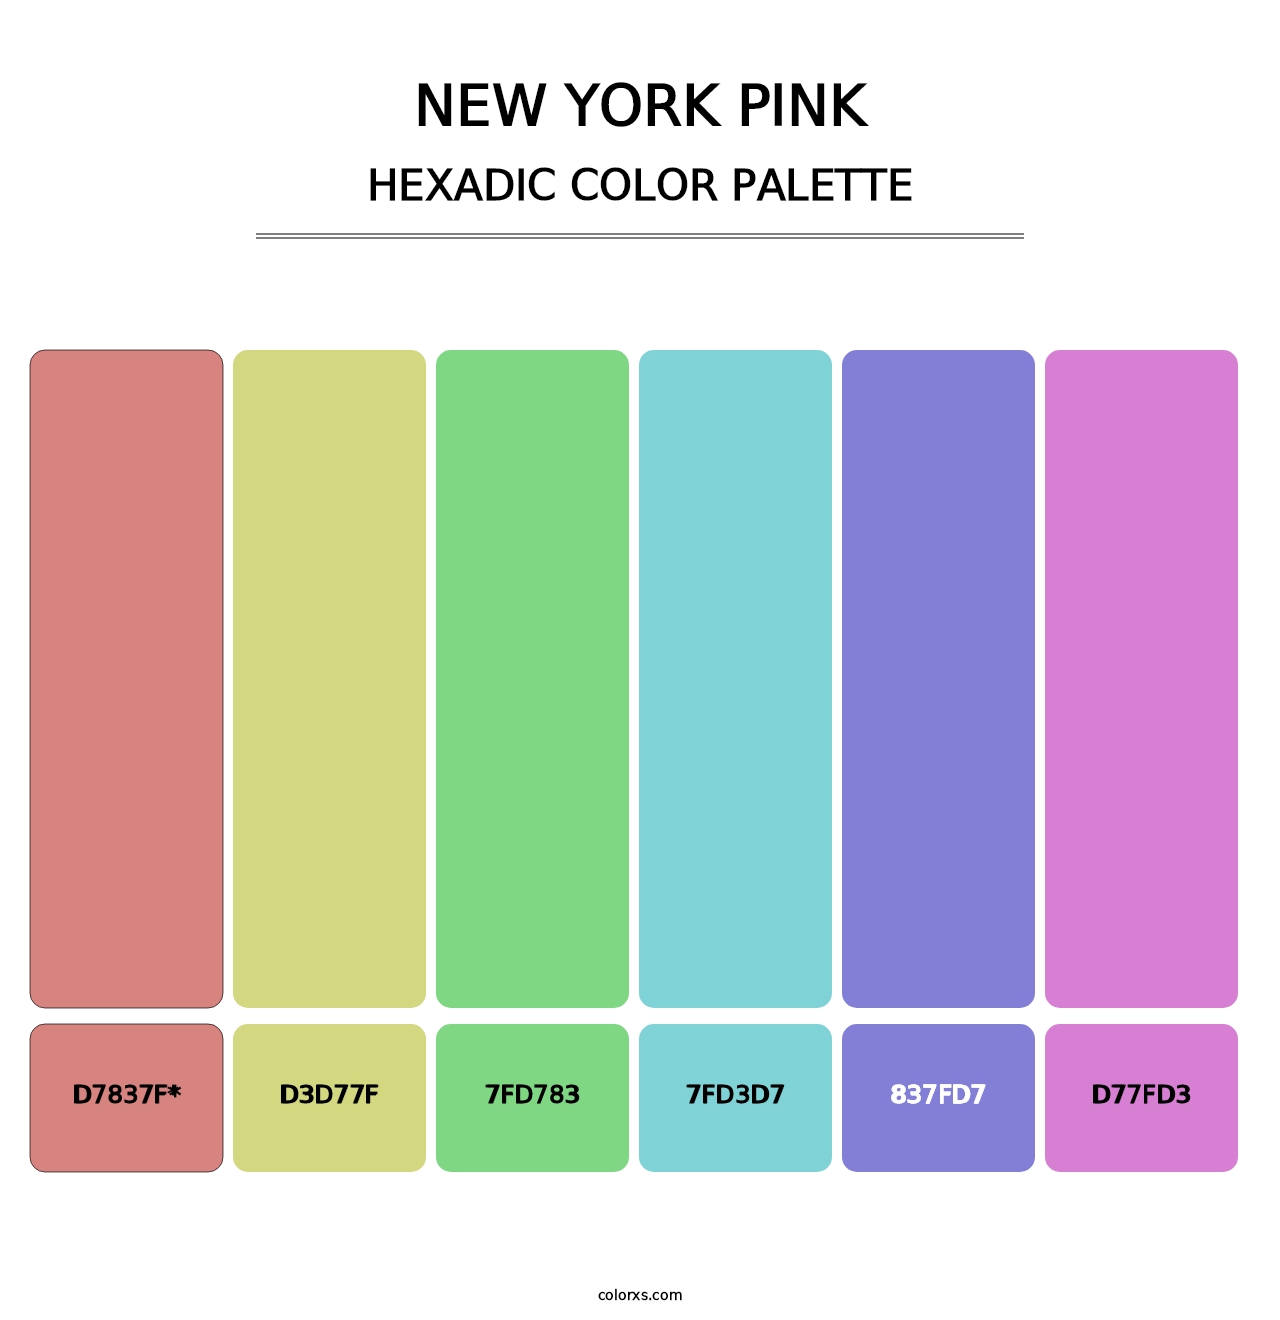 New York Pink - Hexadic Color Palette